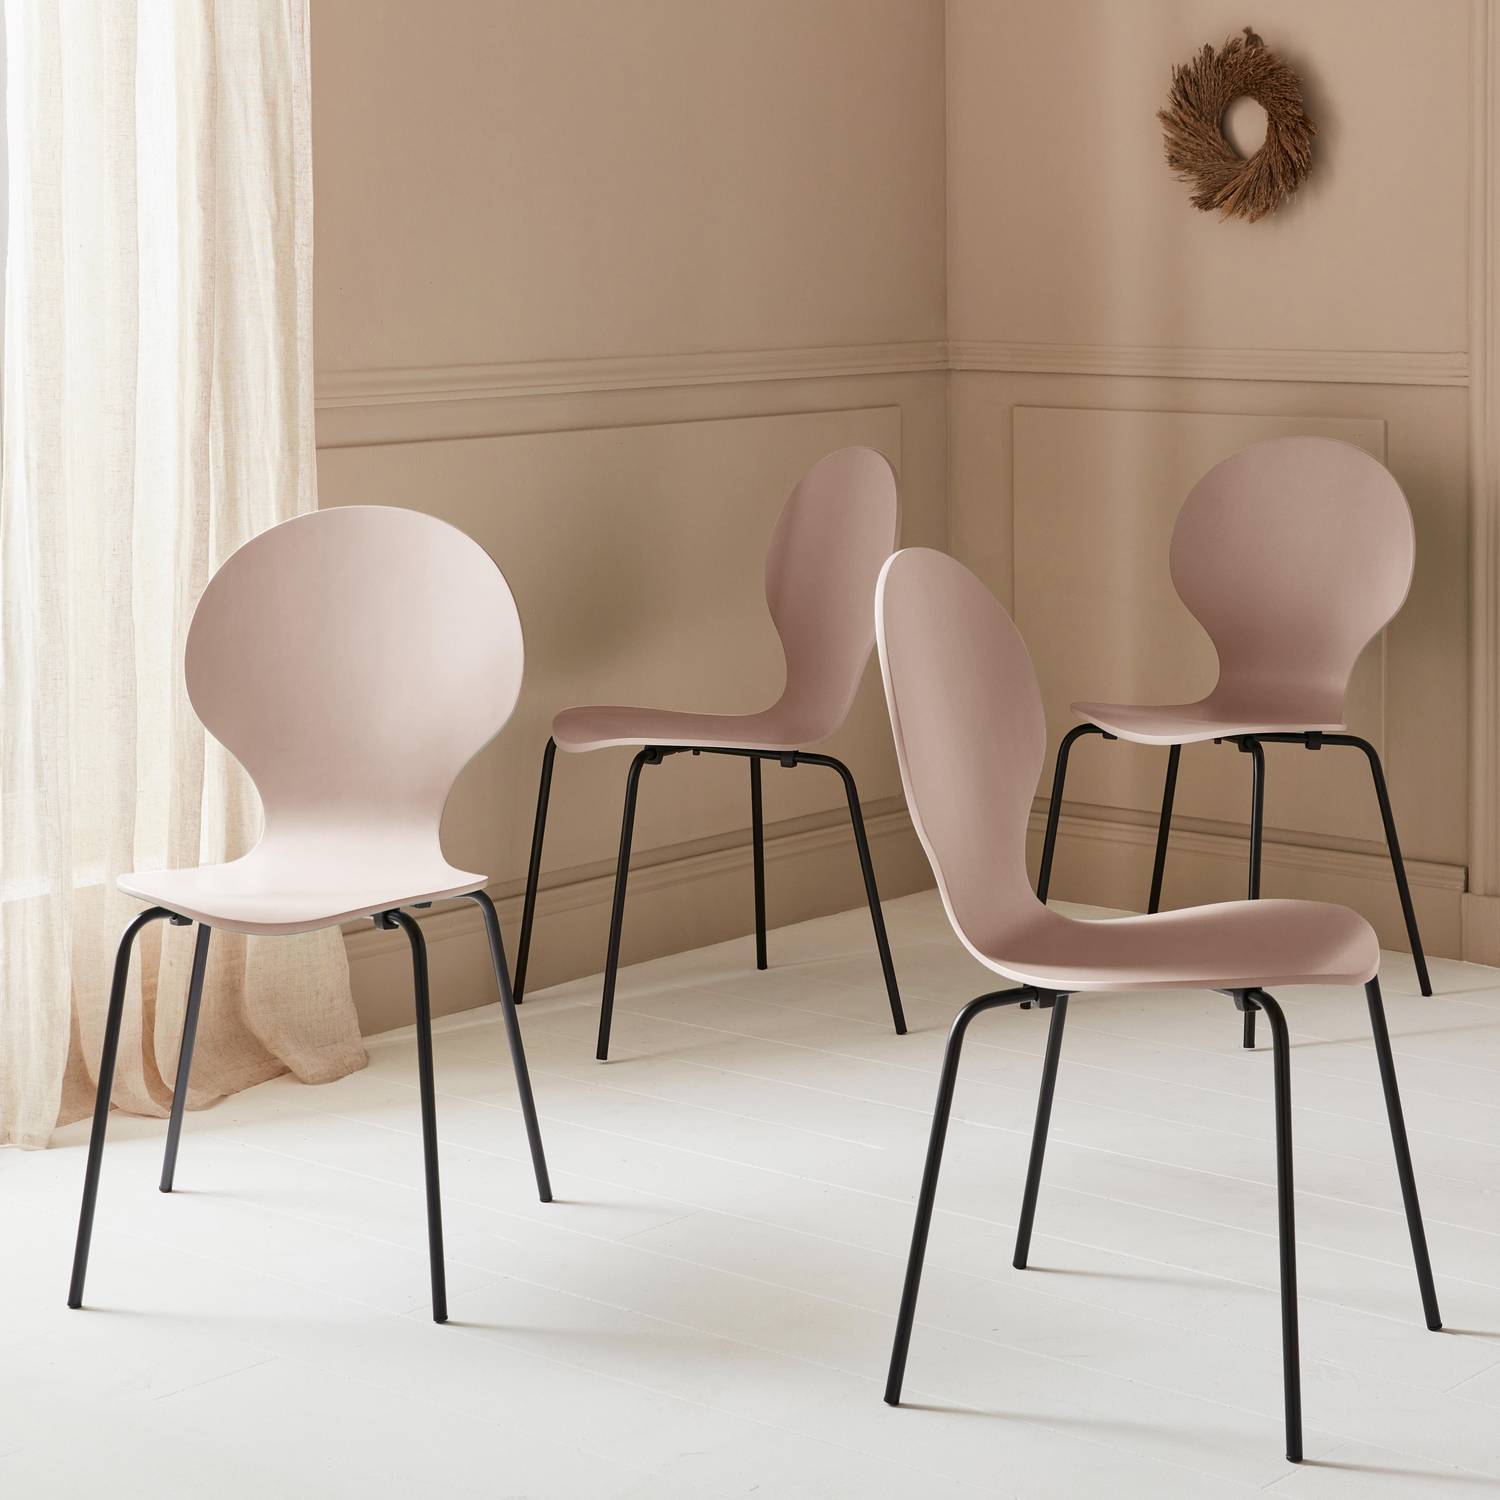 Set van 4 retro roze stapelstoelen, hevea hout en multiplex, stalen poten, Naomi, B 43 x D 48 x H 87cm Photo1